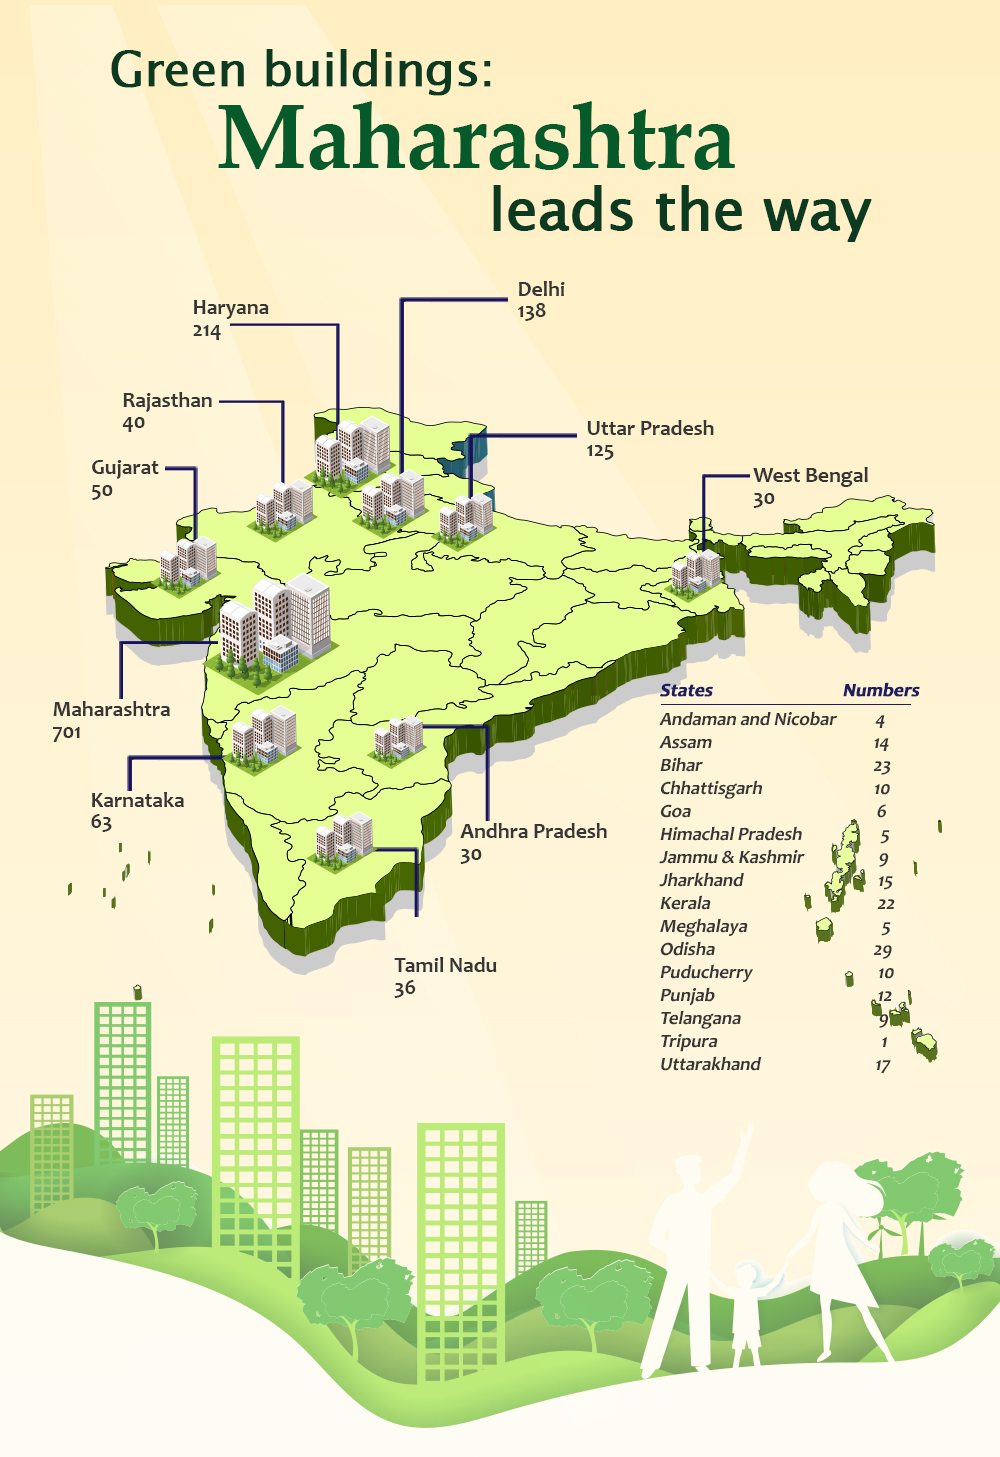 Green buildings - Maharashtra leads the way